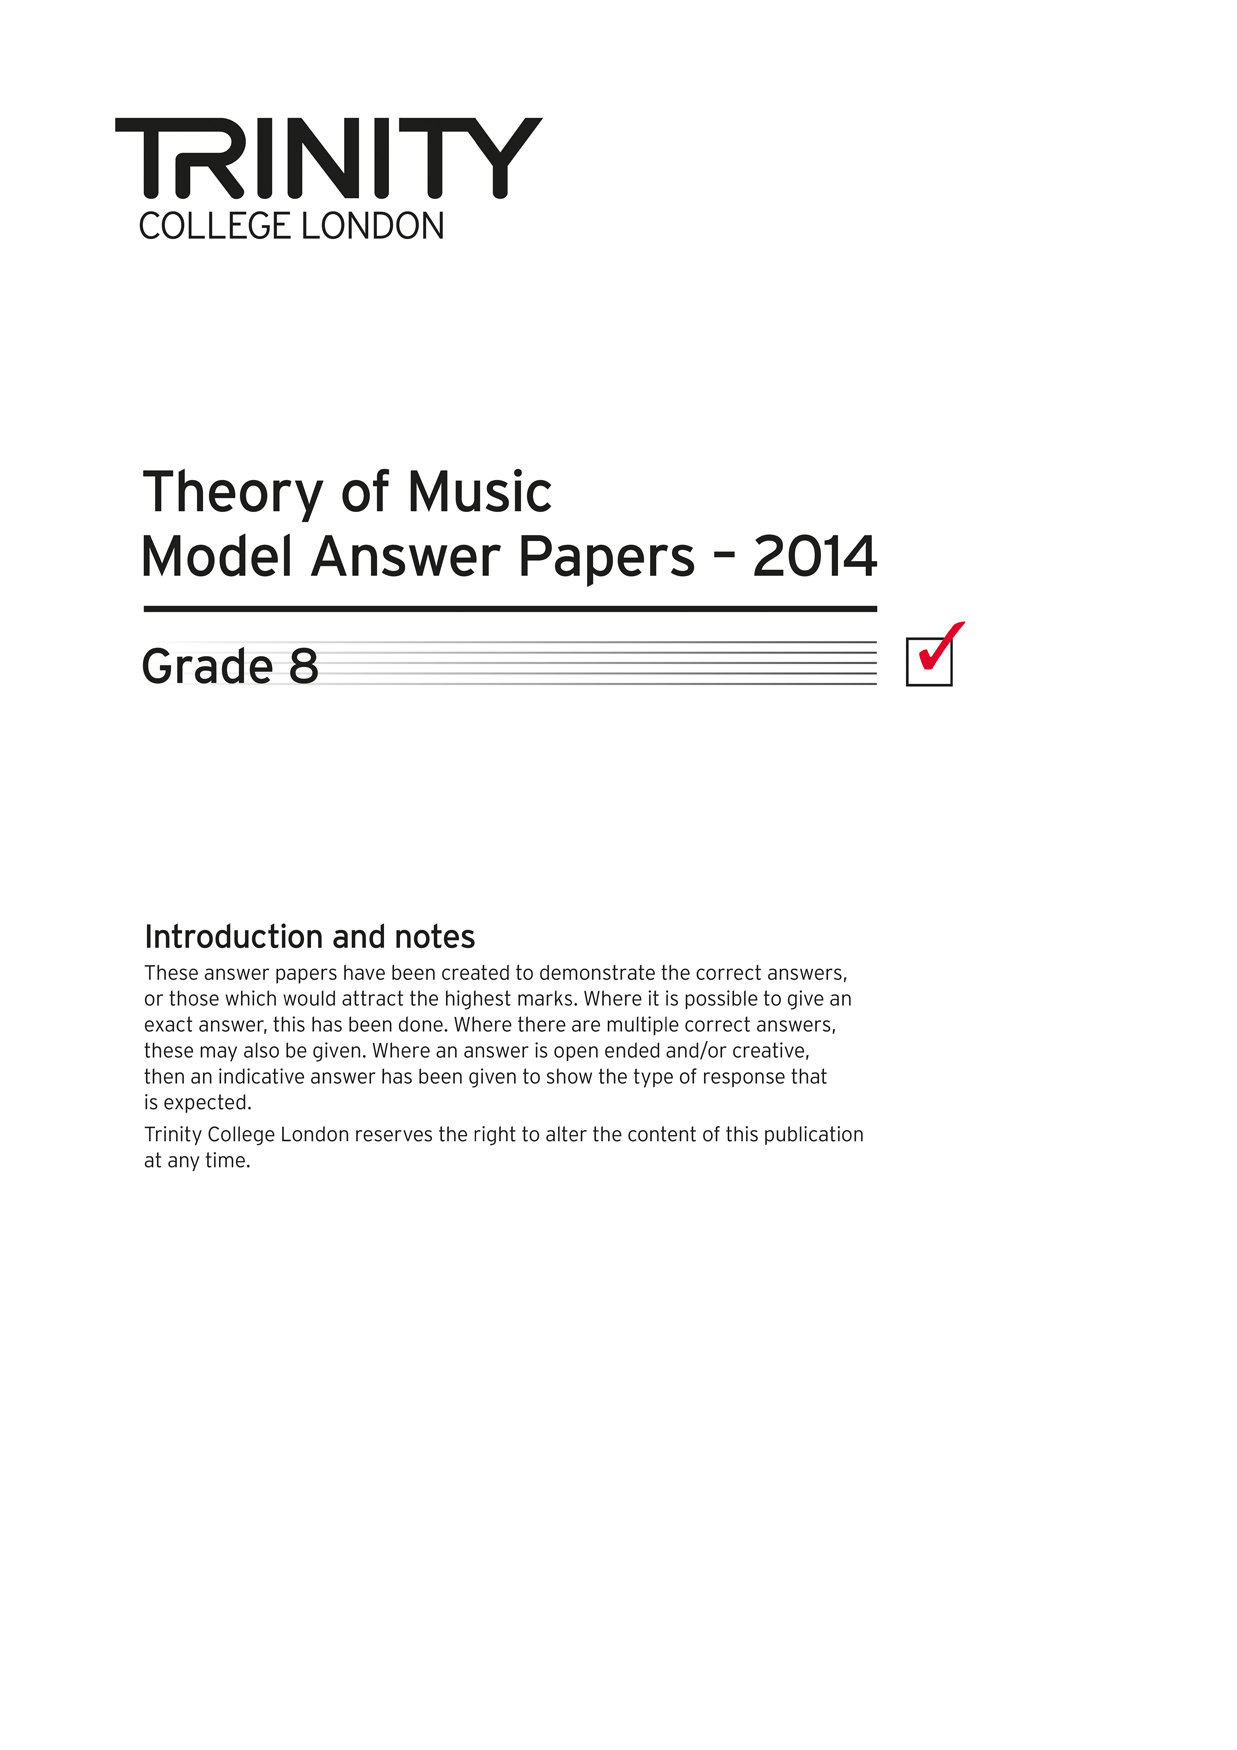 Theory Model Answers 2014 - Grade 8: Theory